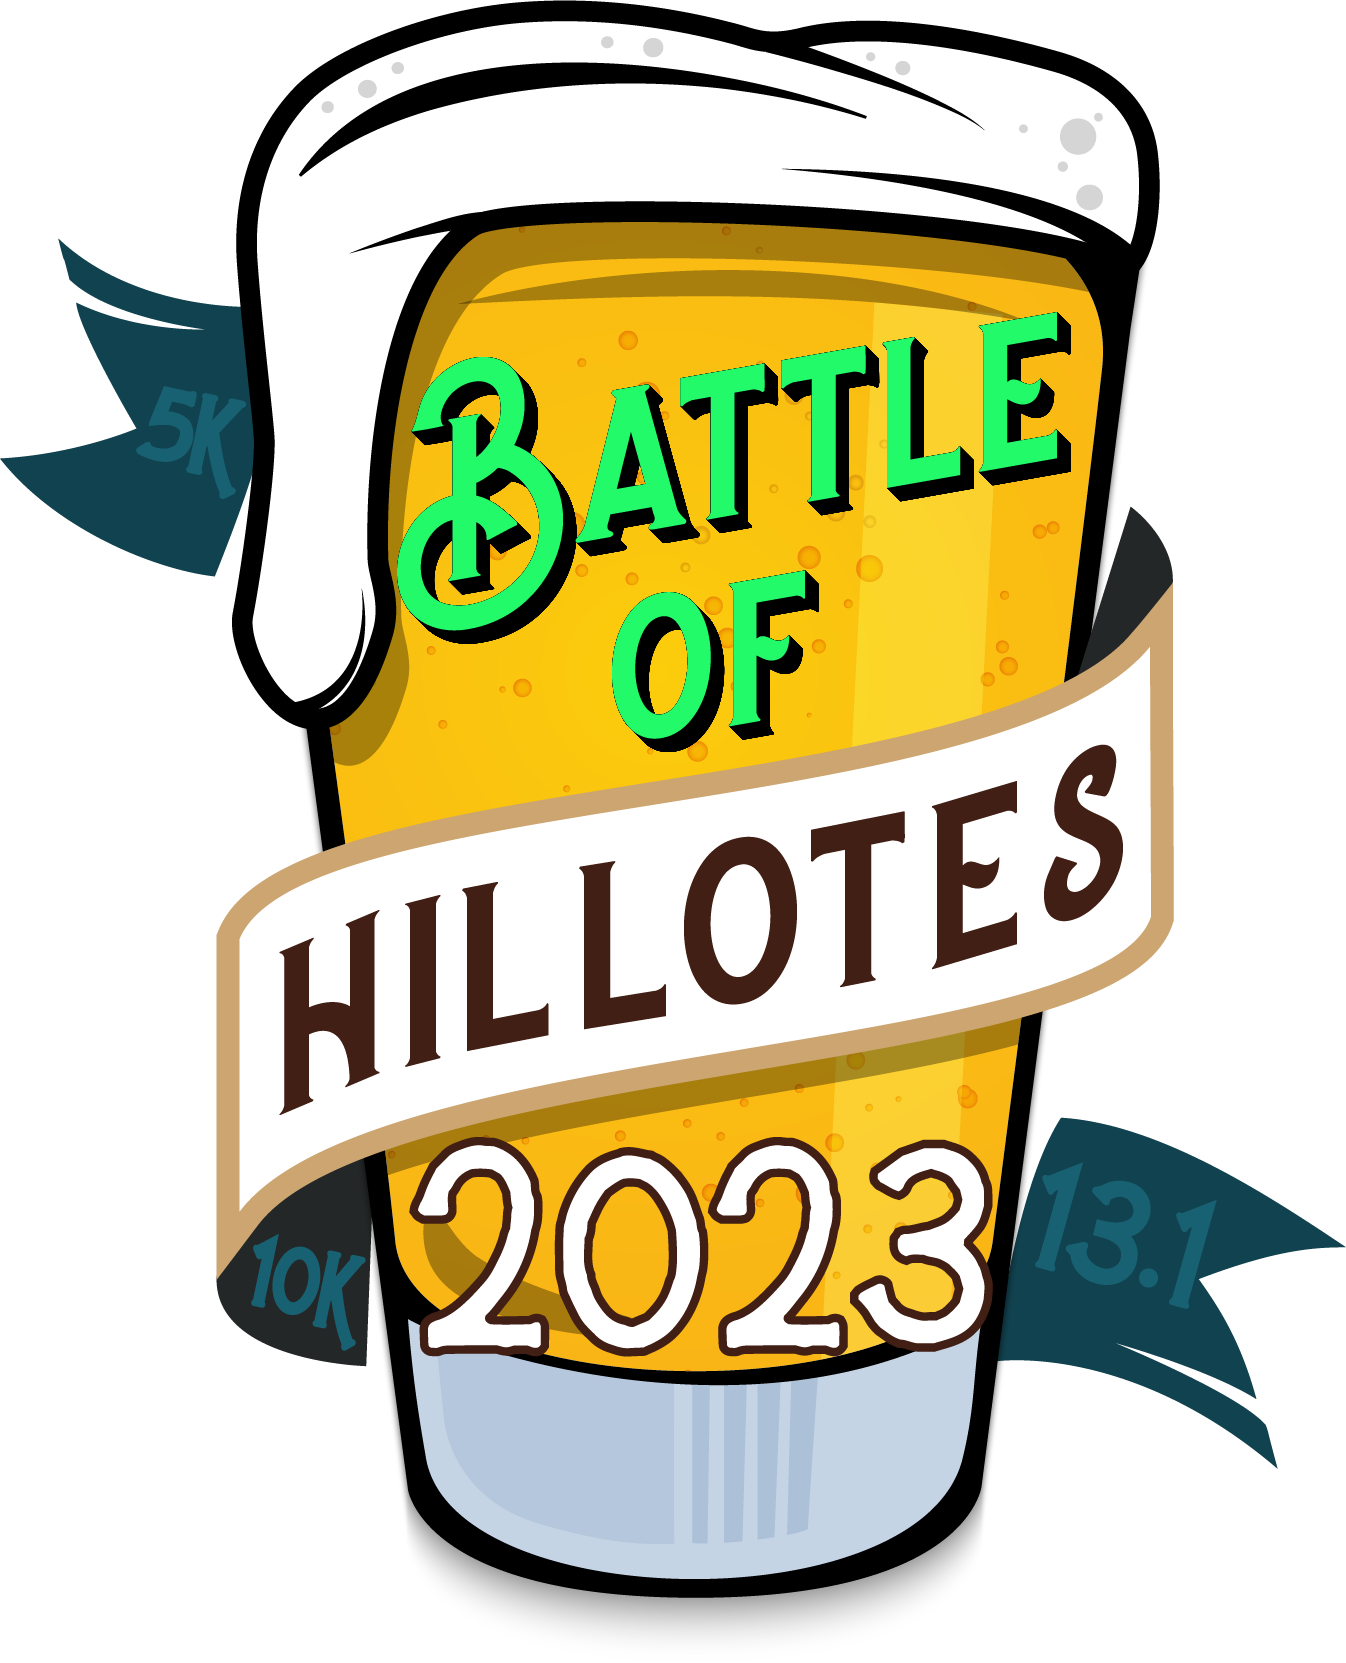 Alamo Beer Challenge Series: Battle of Hillotes logo on RaceRaves